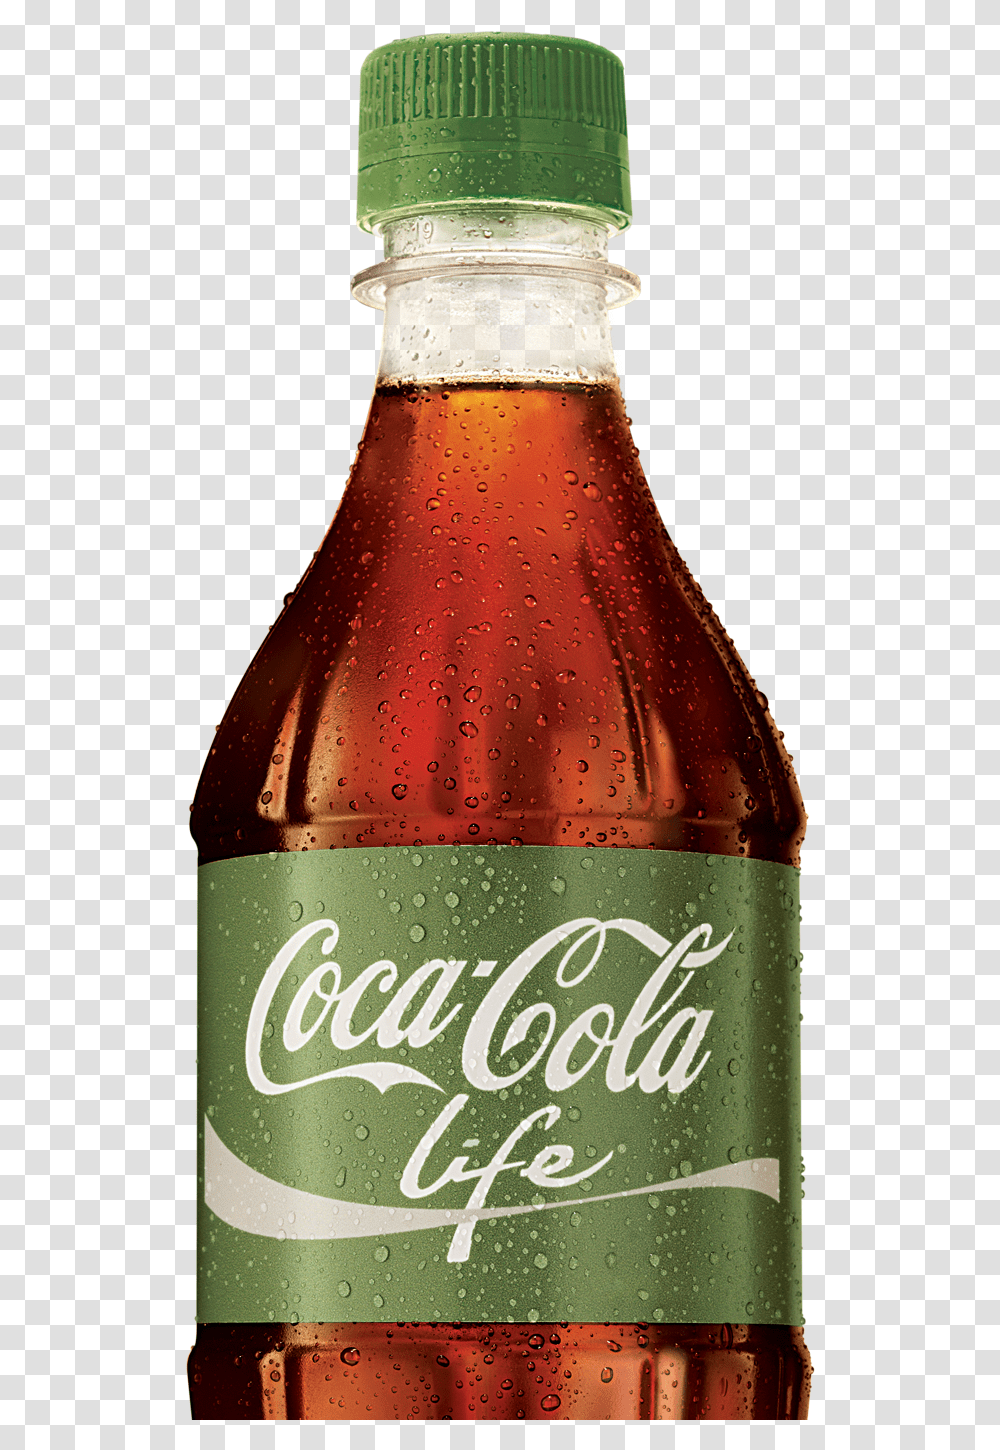 Coca Cola Bottle Coca Cola, Beverage, Drink, Coke, Soda Transparent Png